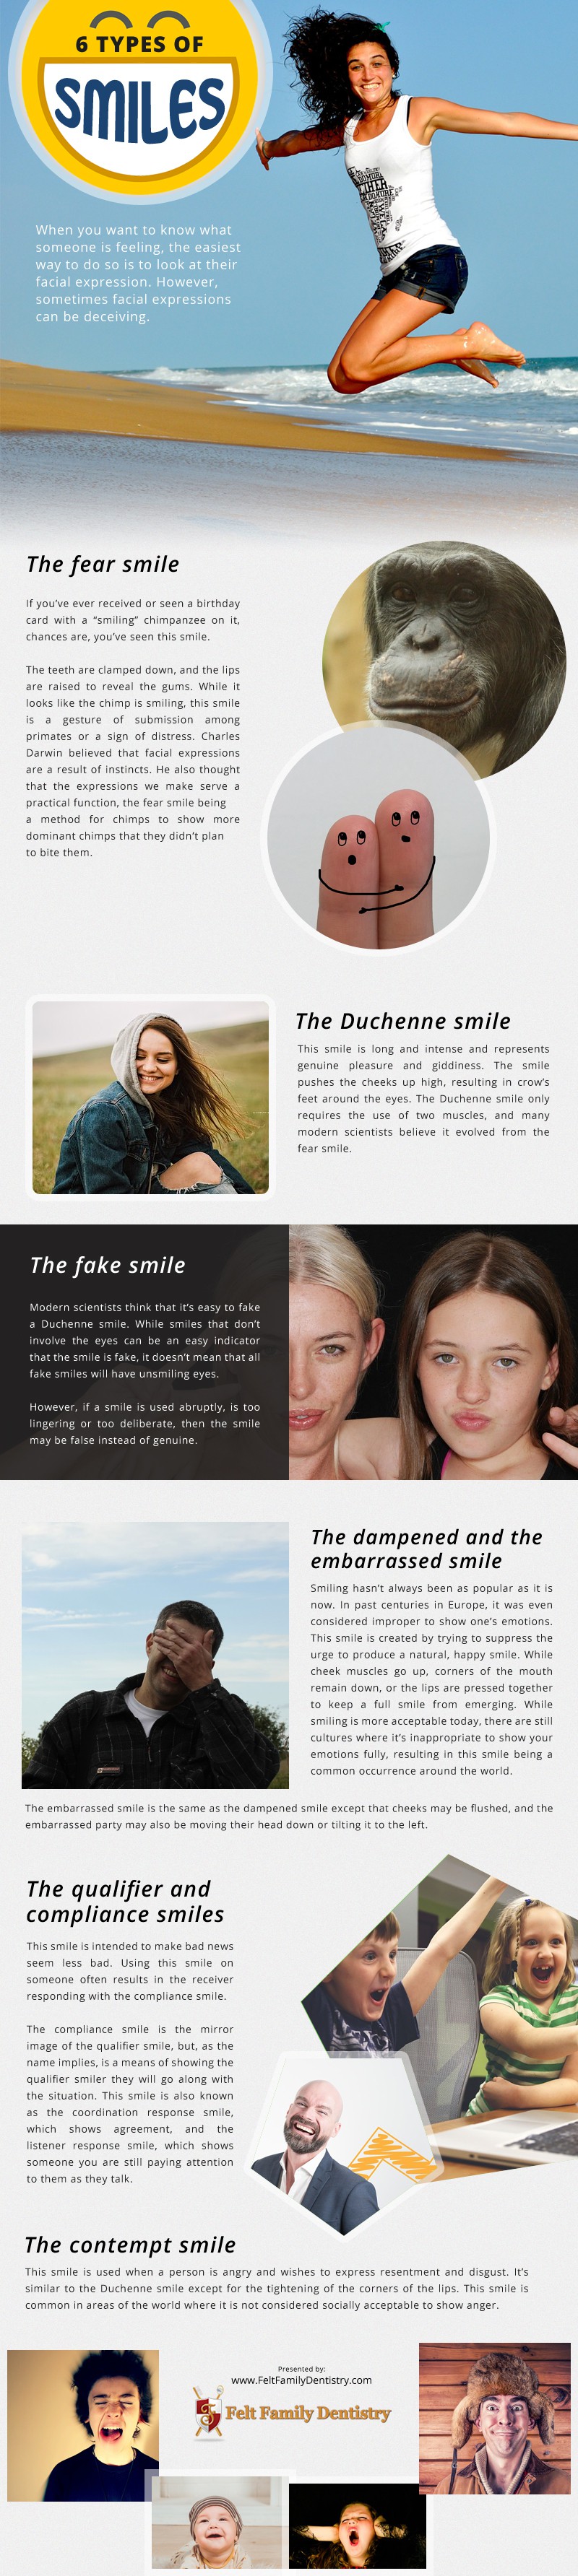 6 Types of Smiles infographic